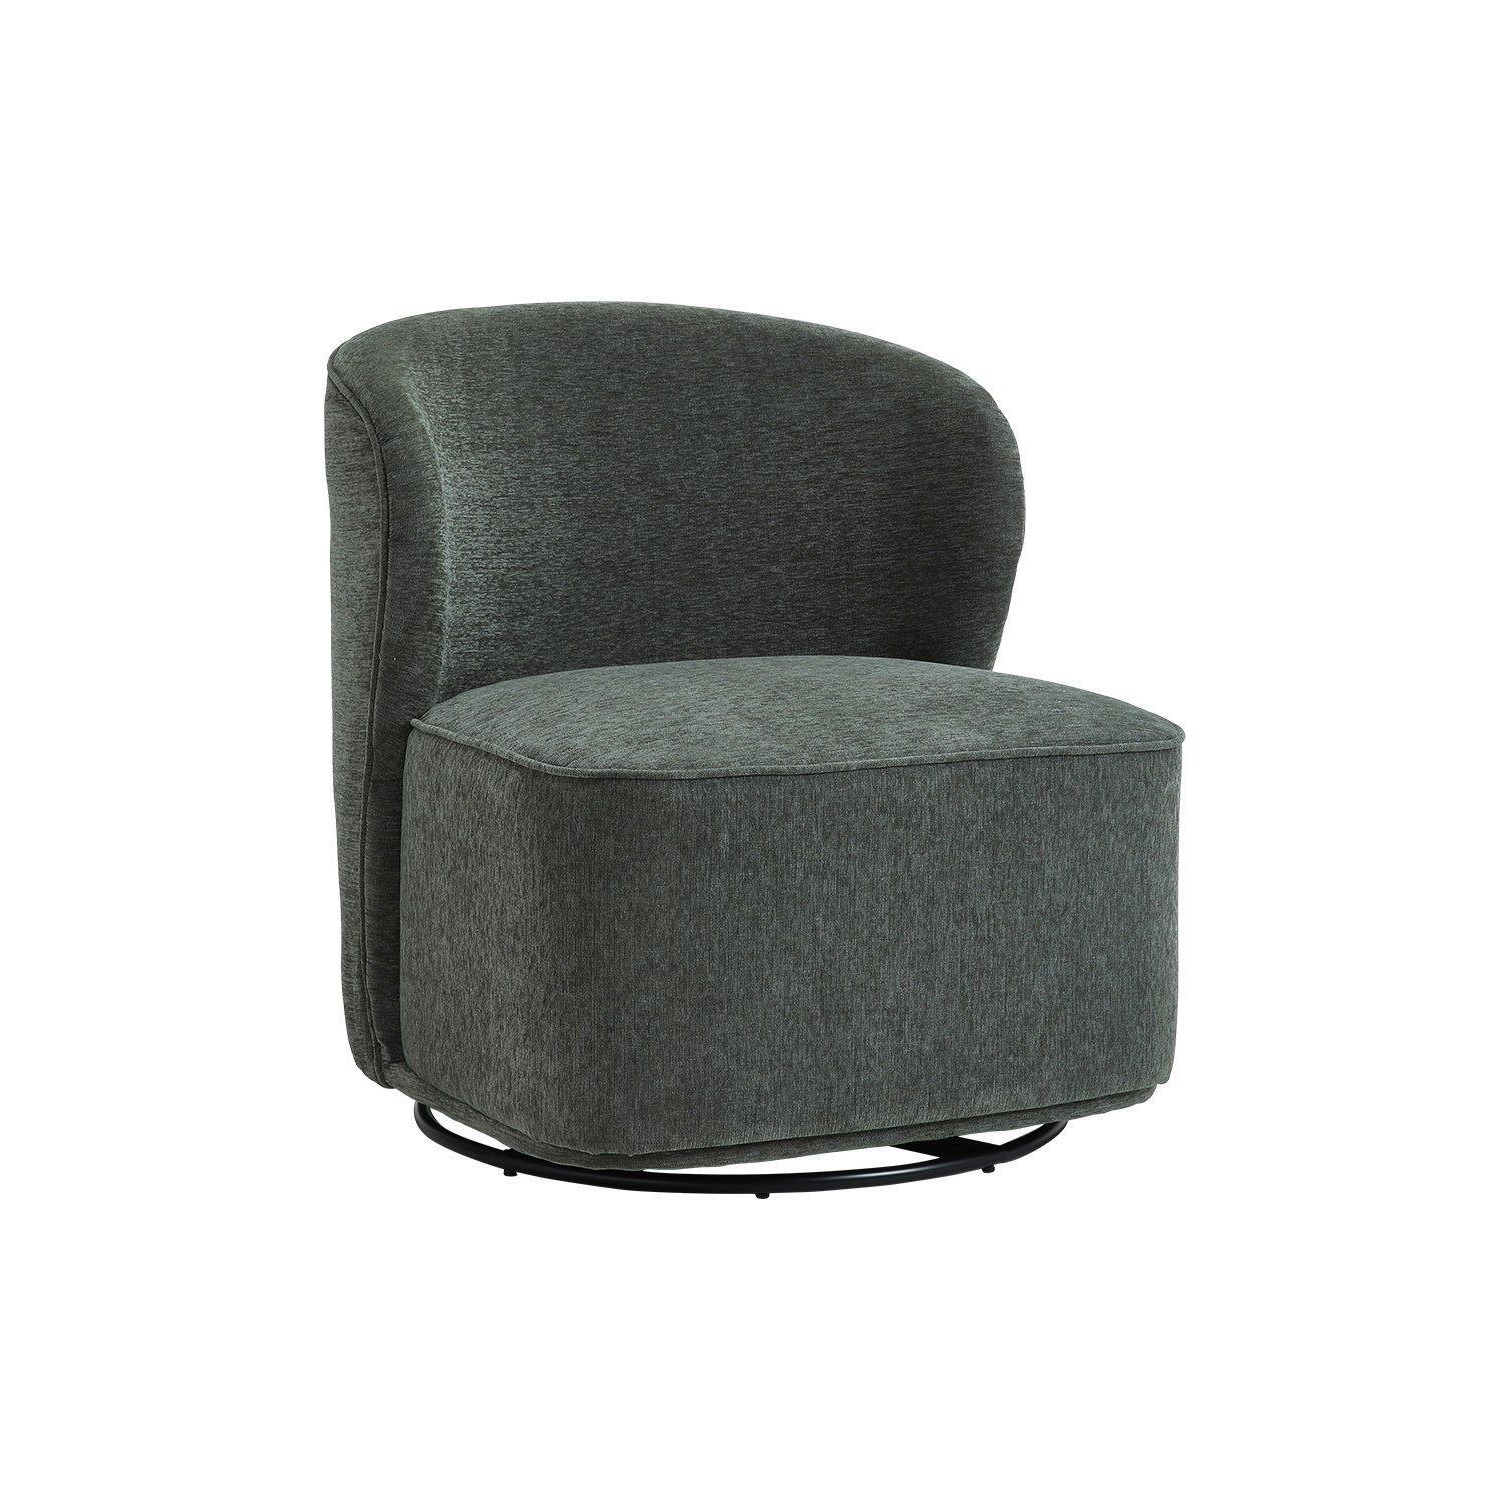 Chic Upholstered Dark Green Swivel Chair - image 1